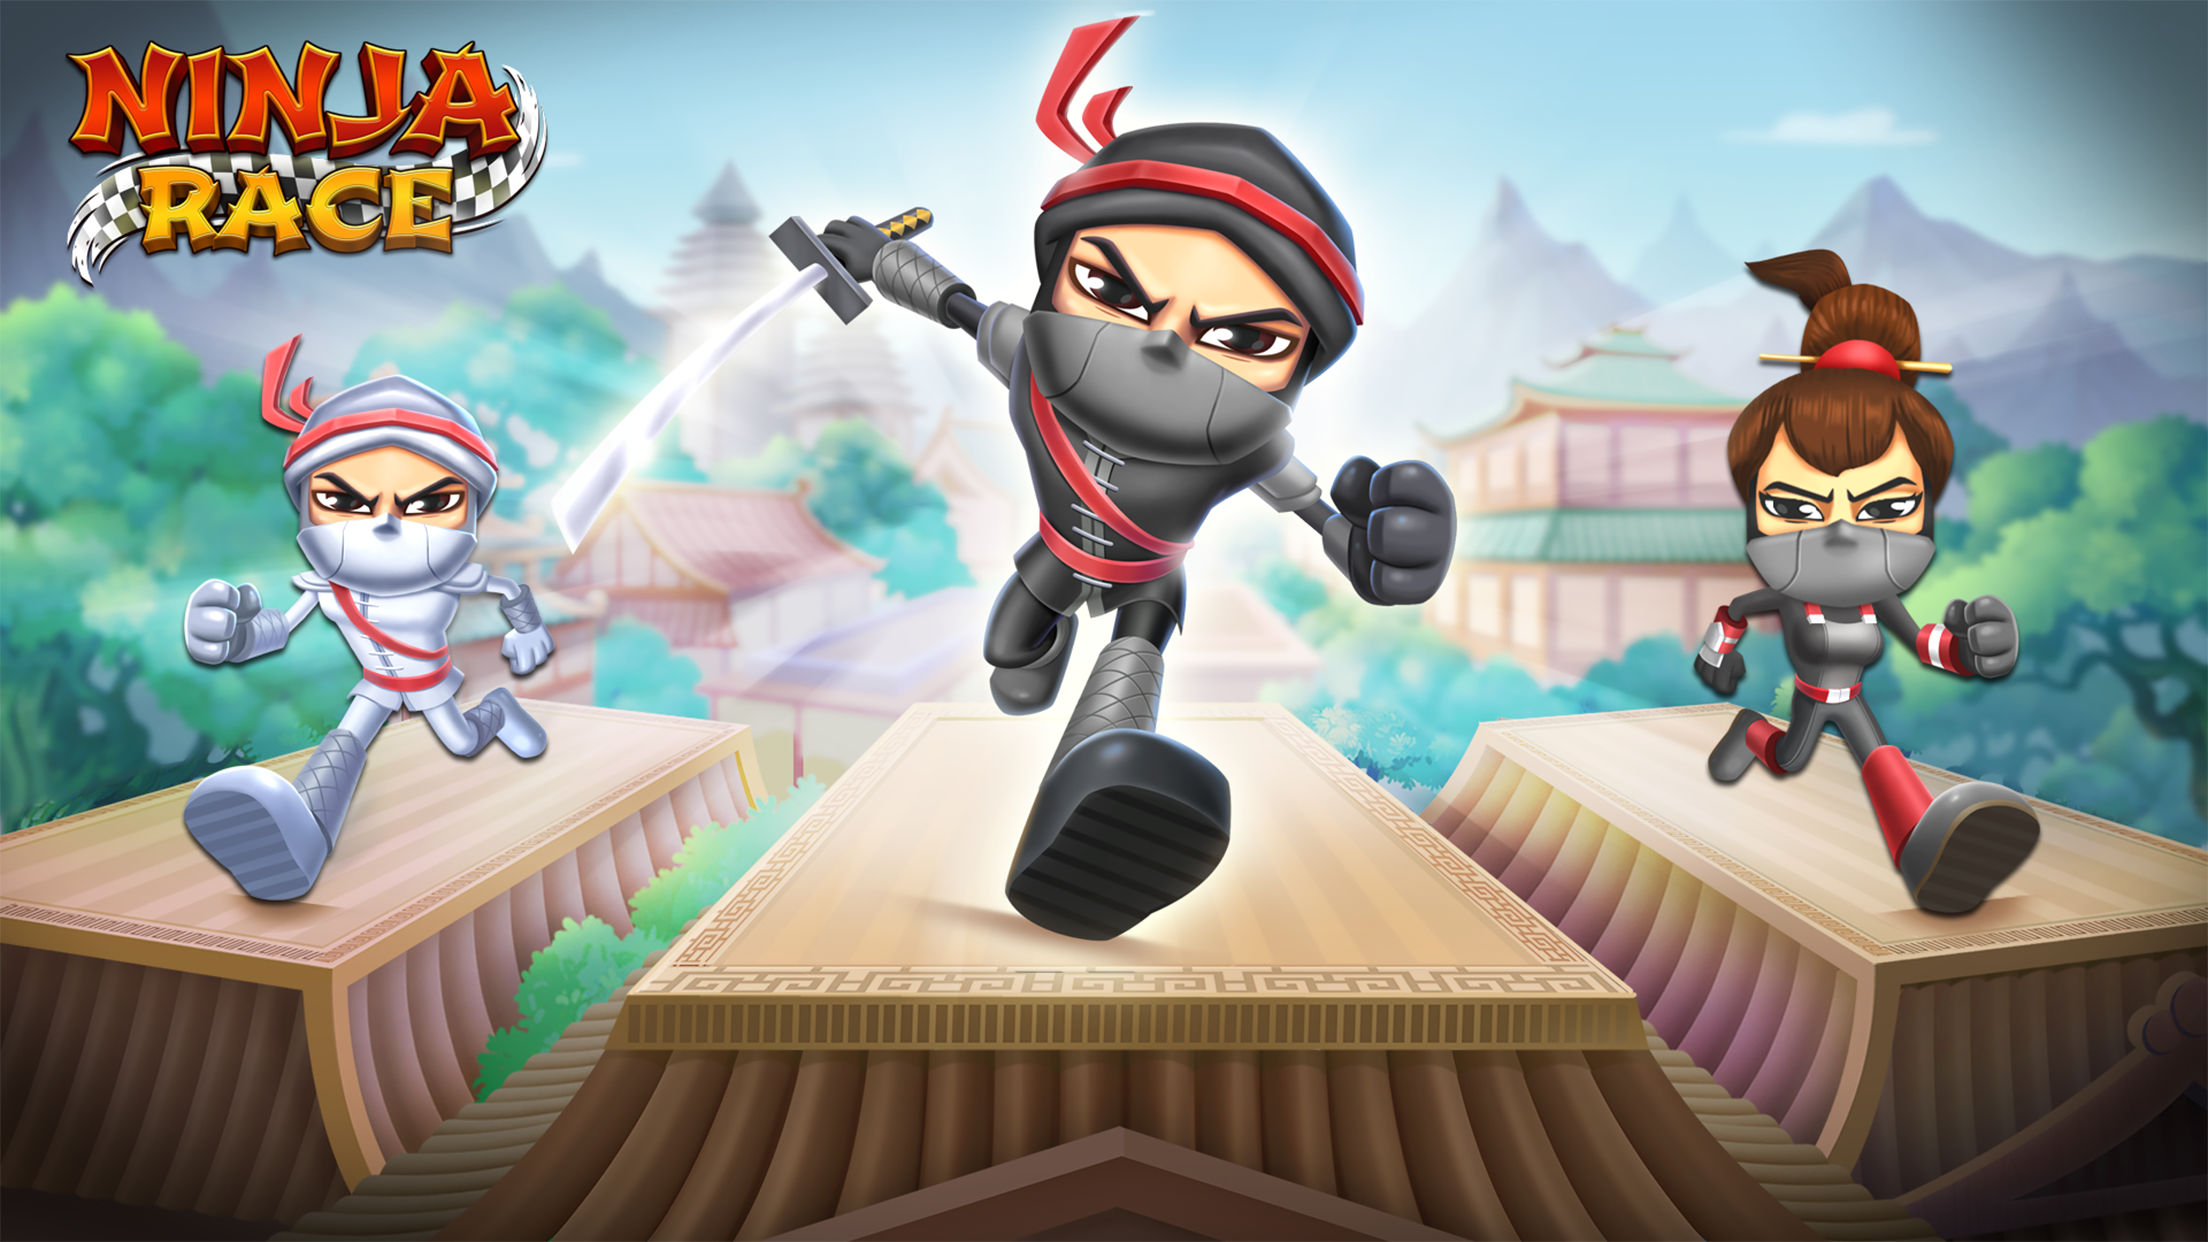 Screenshot 1 of Ninja Race - เล่นสนุกหลายคน 